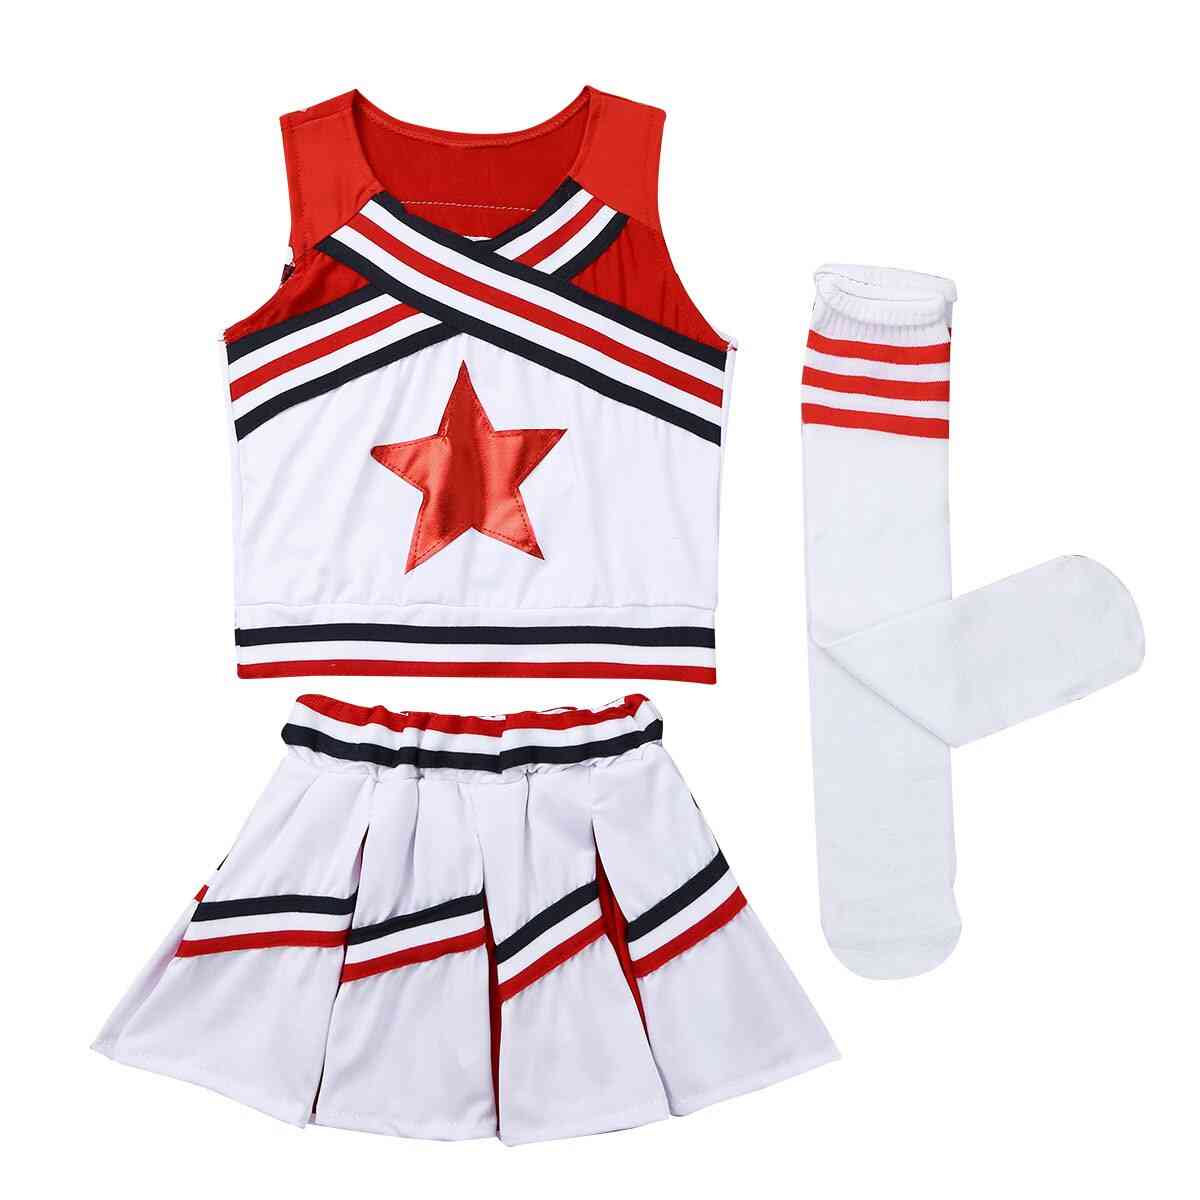 Kids Cheerleader Costume Sleeveless Tops With Shorts Skirt Socks Set